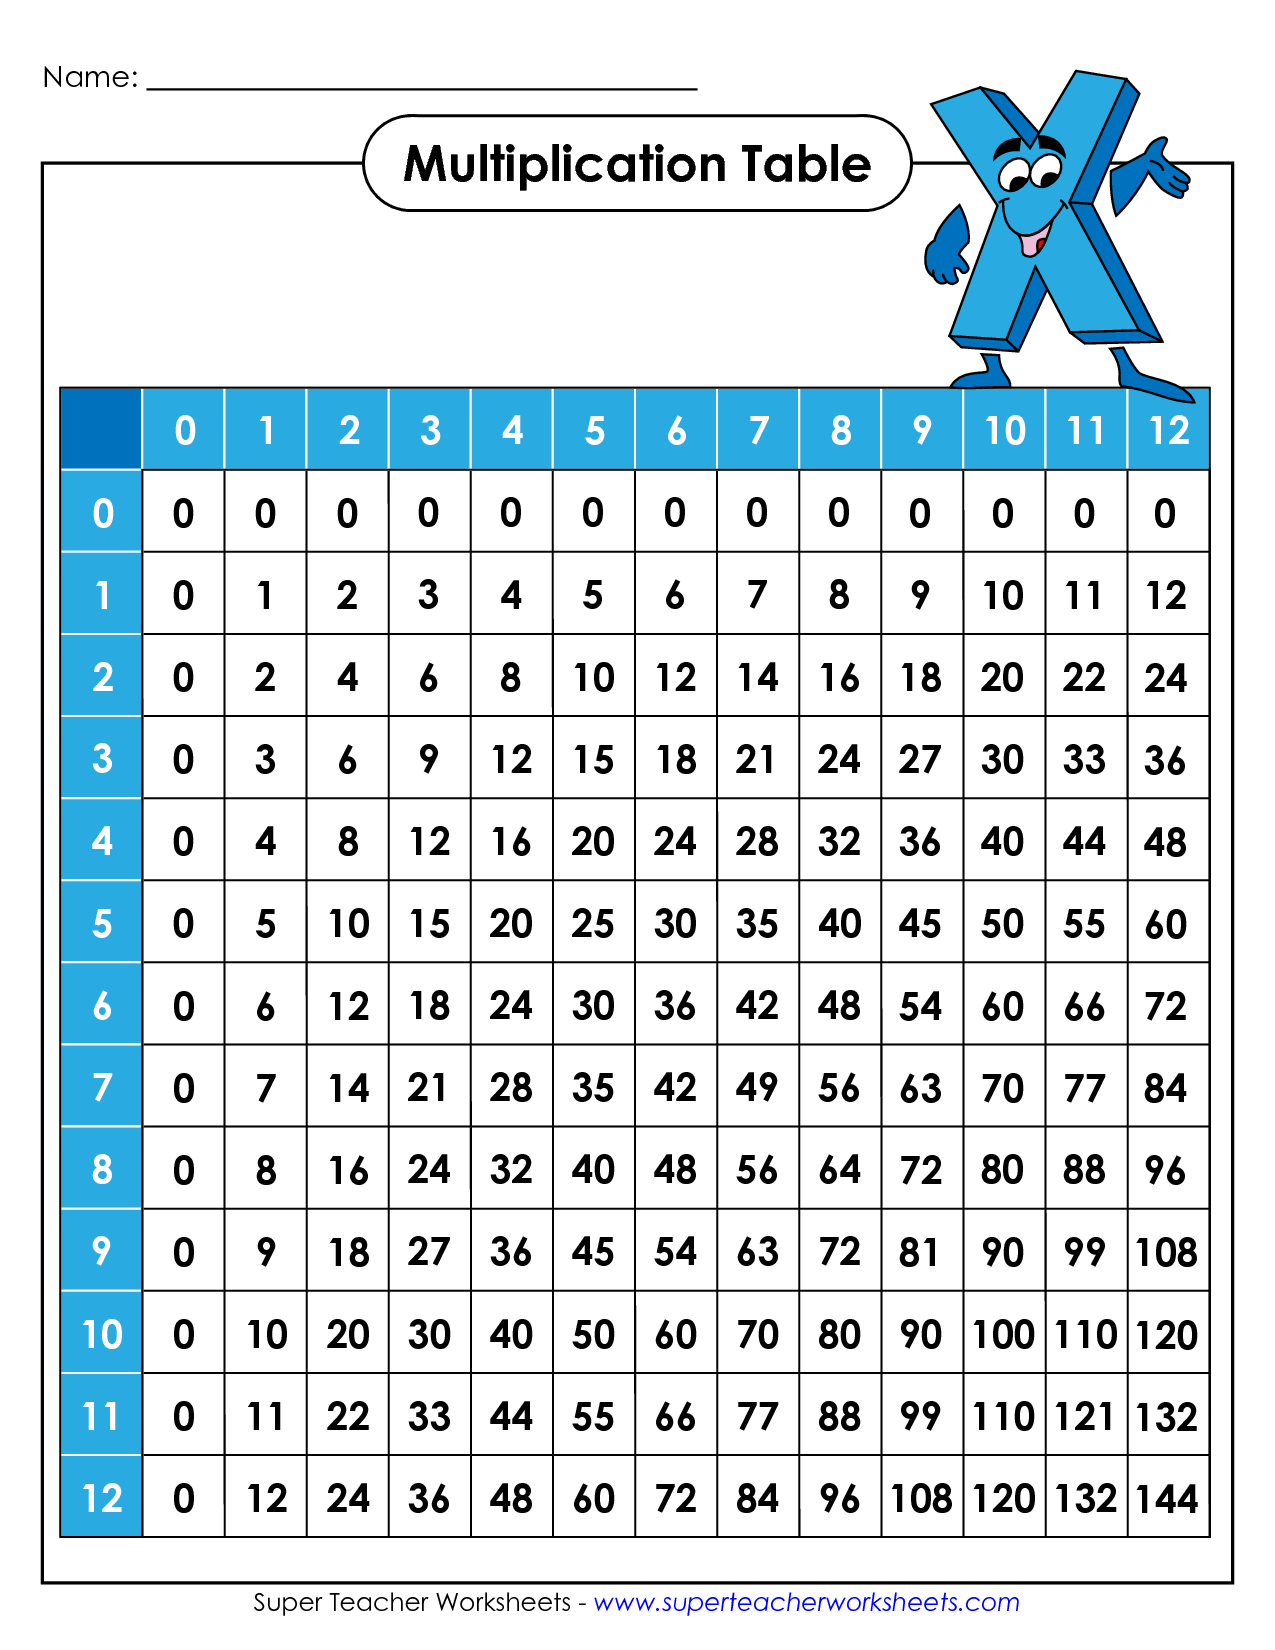 multiplication-chart-printable-super-teacher-printable-multiplication